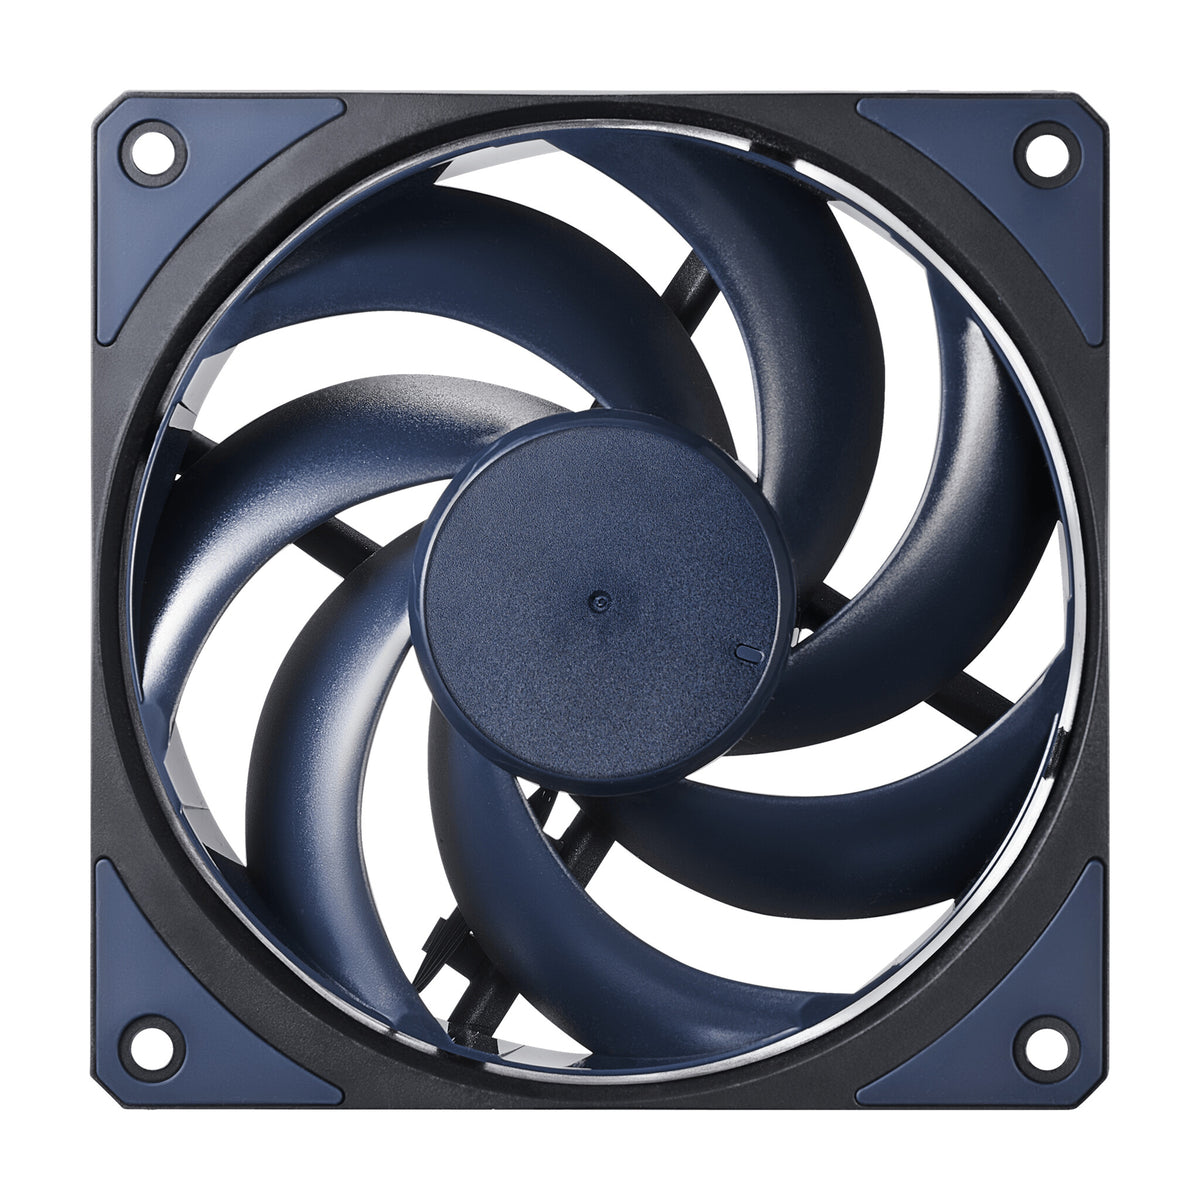 Cooler Master Mobius 120 - 120mm PC Case Fan